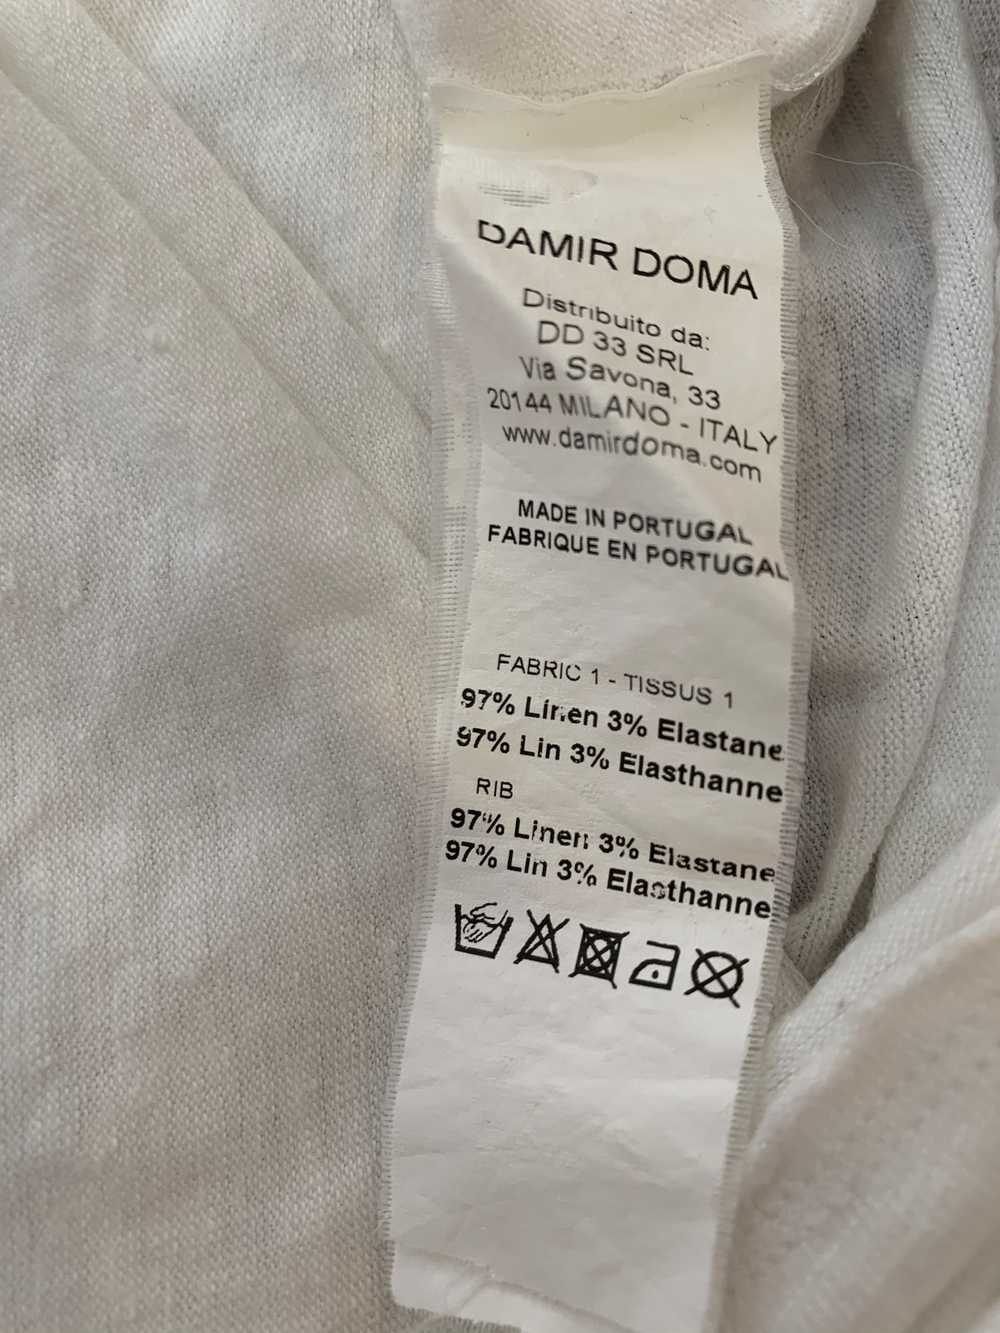 Damir Doma T-shirt - image 4